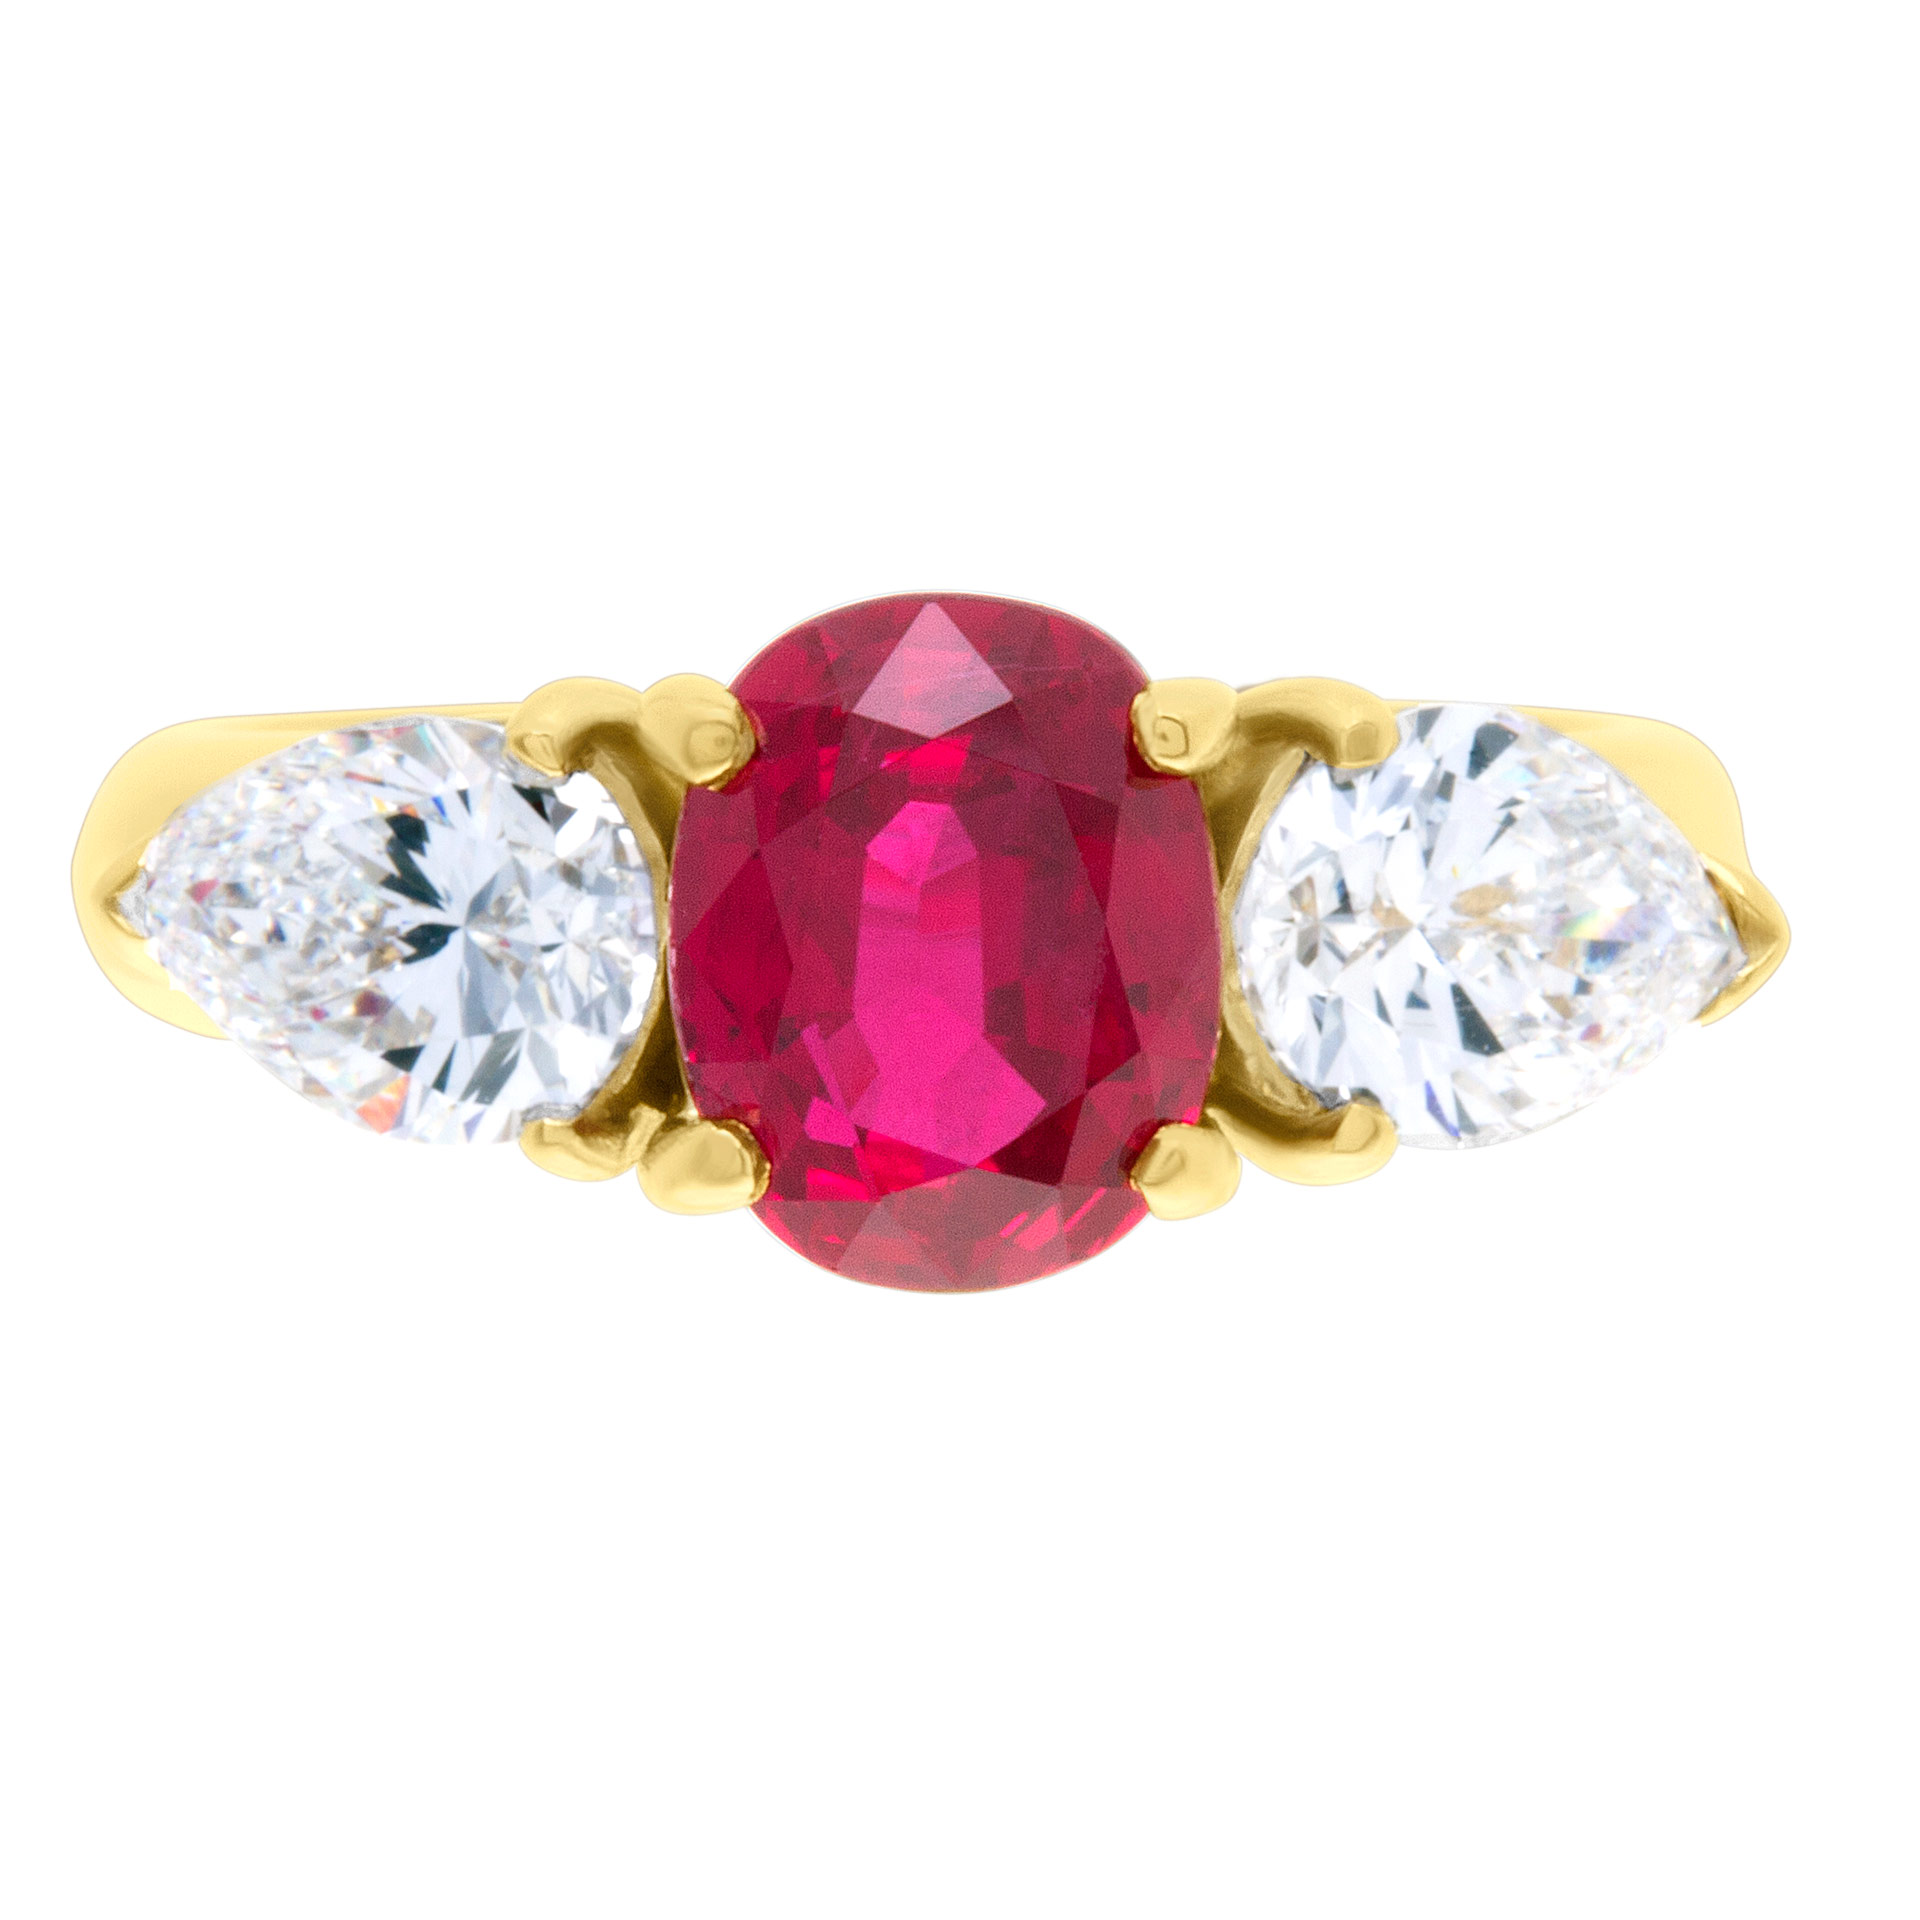 AGL certified 2 carat oval cut ruby ring in in 18k with 2 pear cut side diamonds